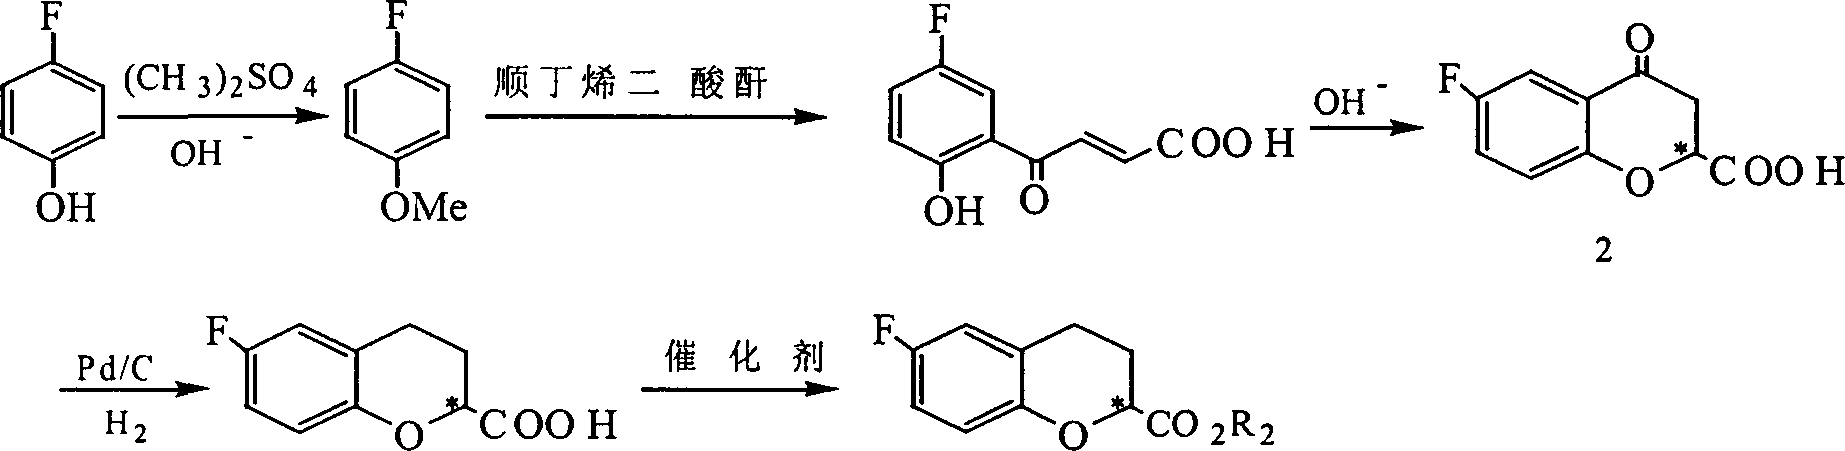 Method for synthesizing optical enantiomer 6-fluoro-3,4-dihydro-2H-1-benzopyran-2-carboxylic acid and 6-fluoro-3,4-dihydro-2H-1-benzopyran-2-carboxylate